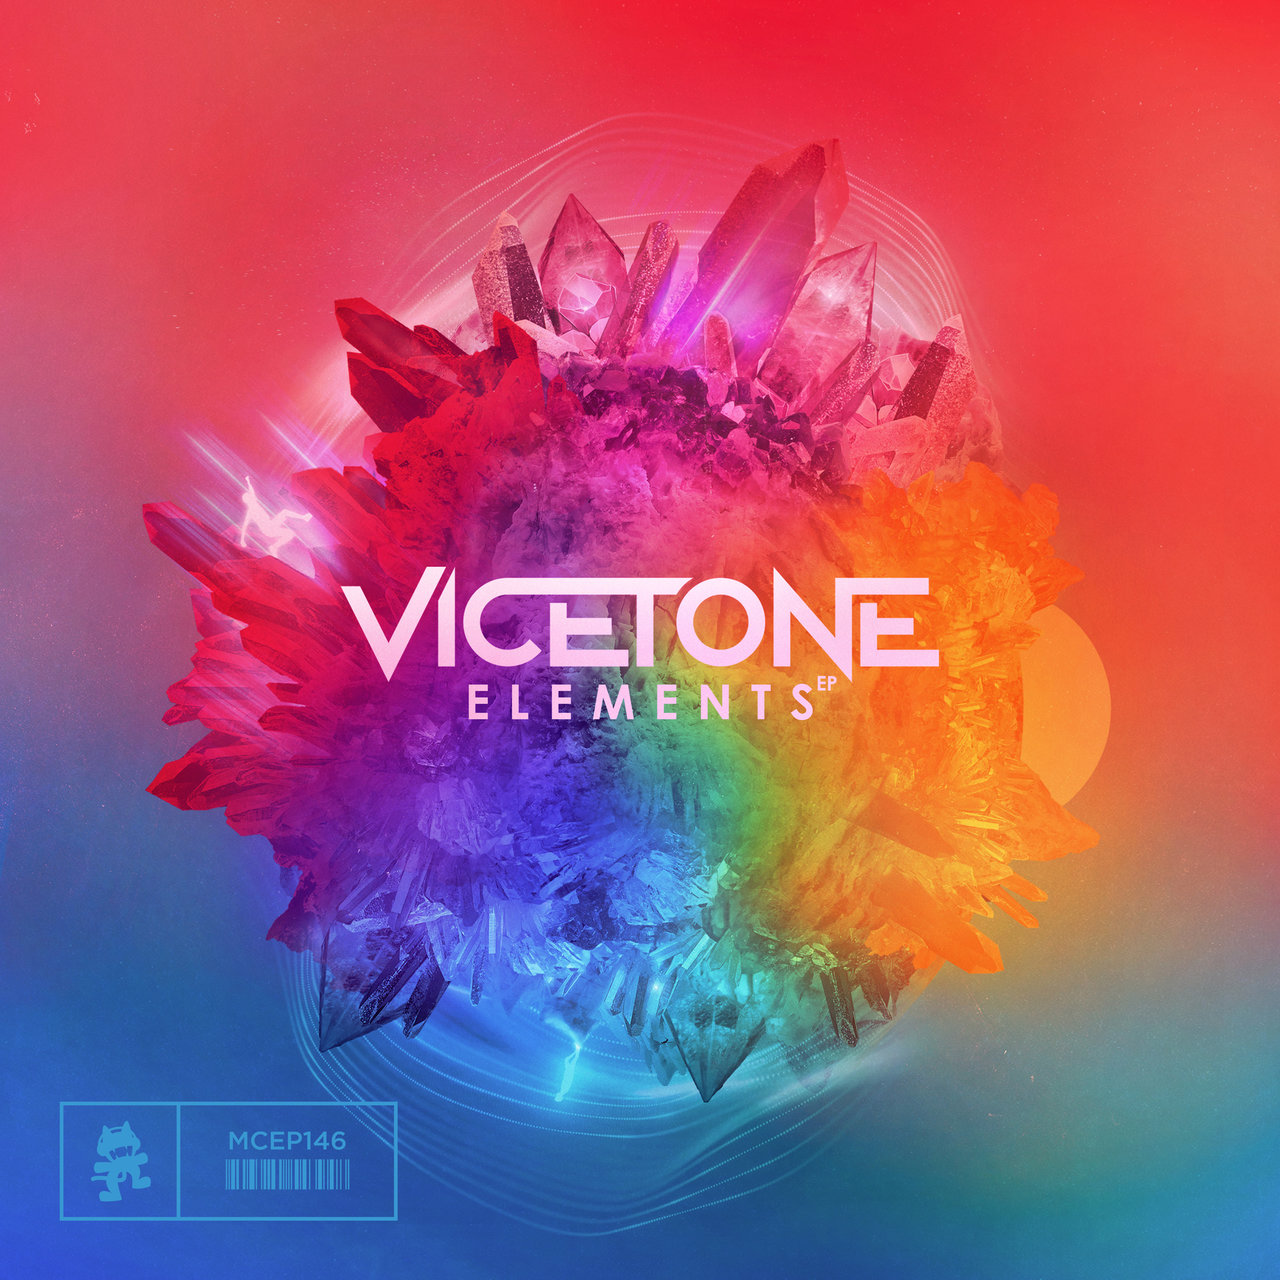 Vicetone Elements cover artwork